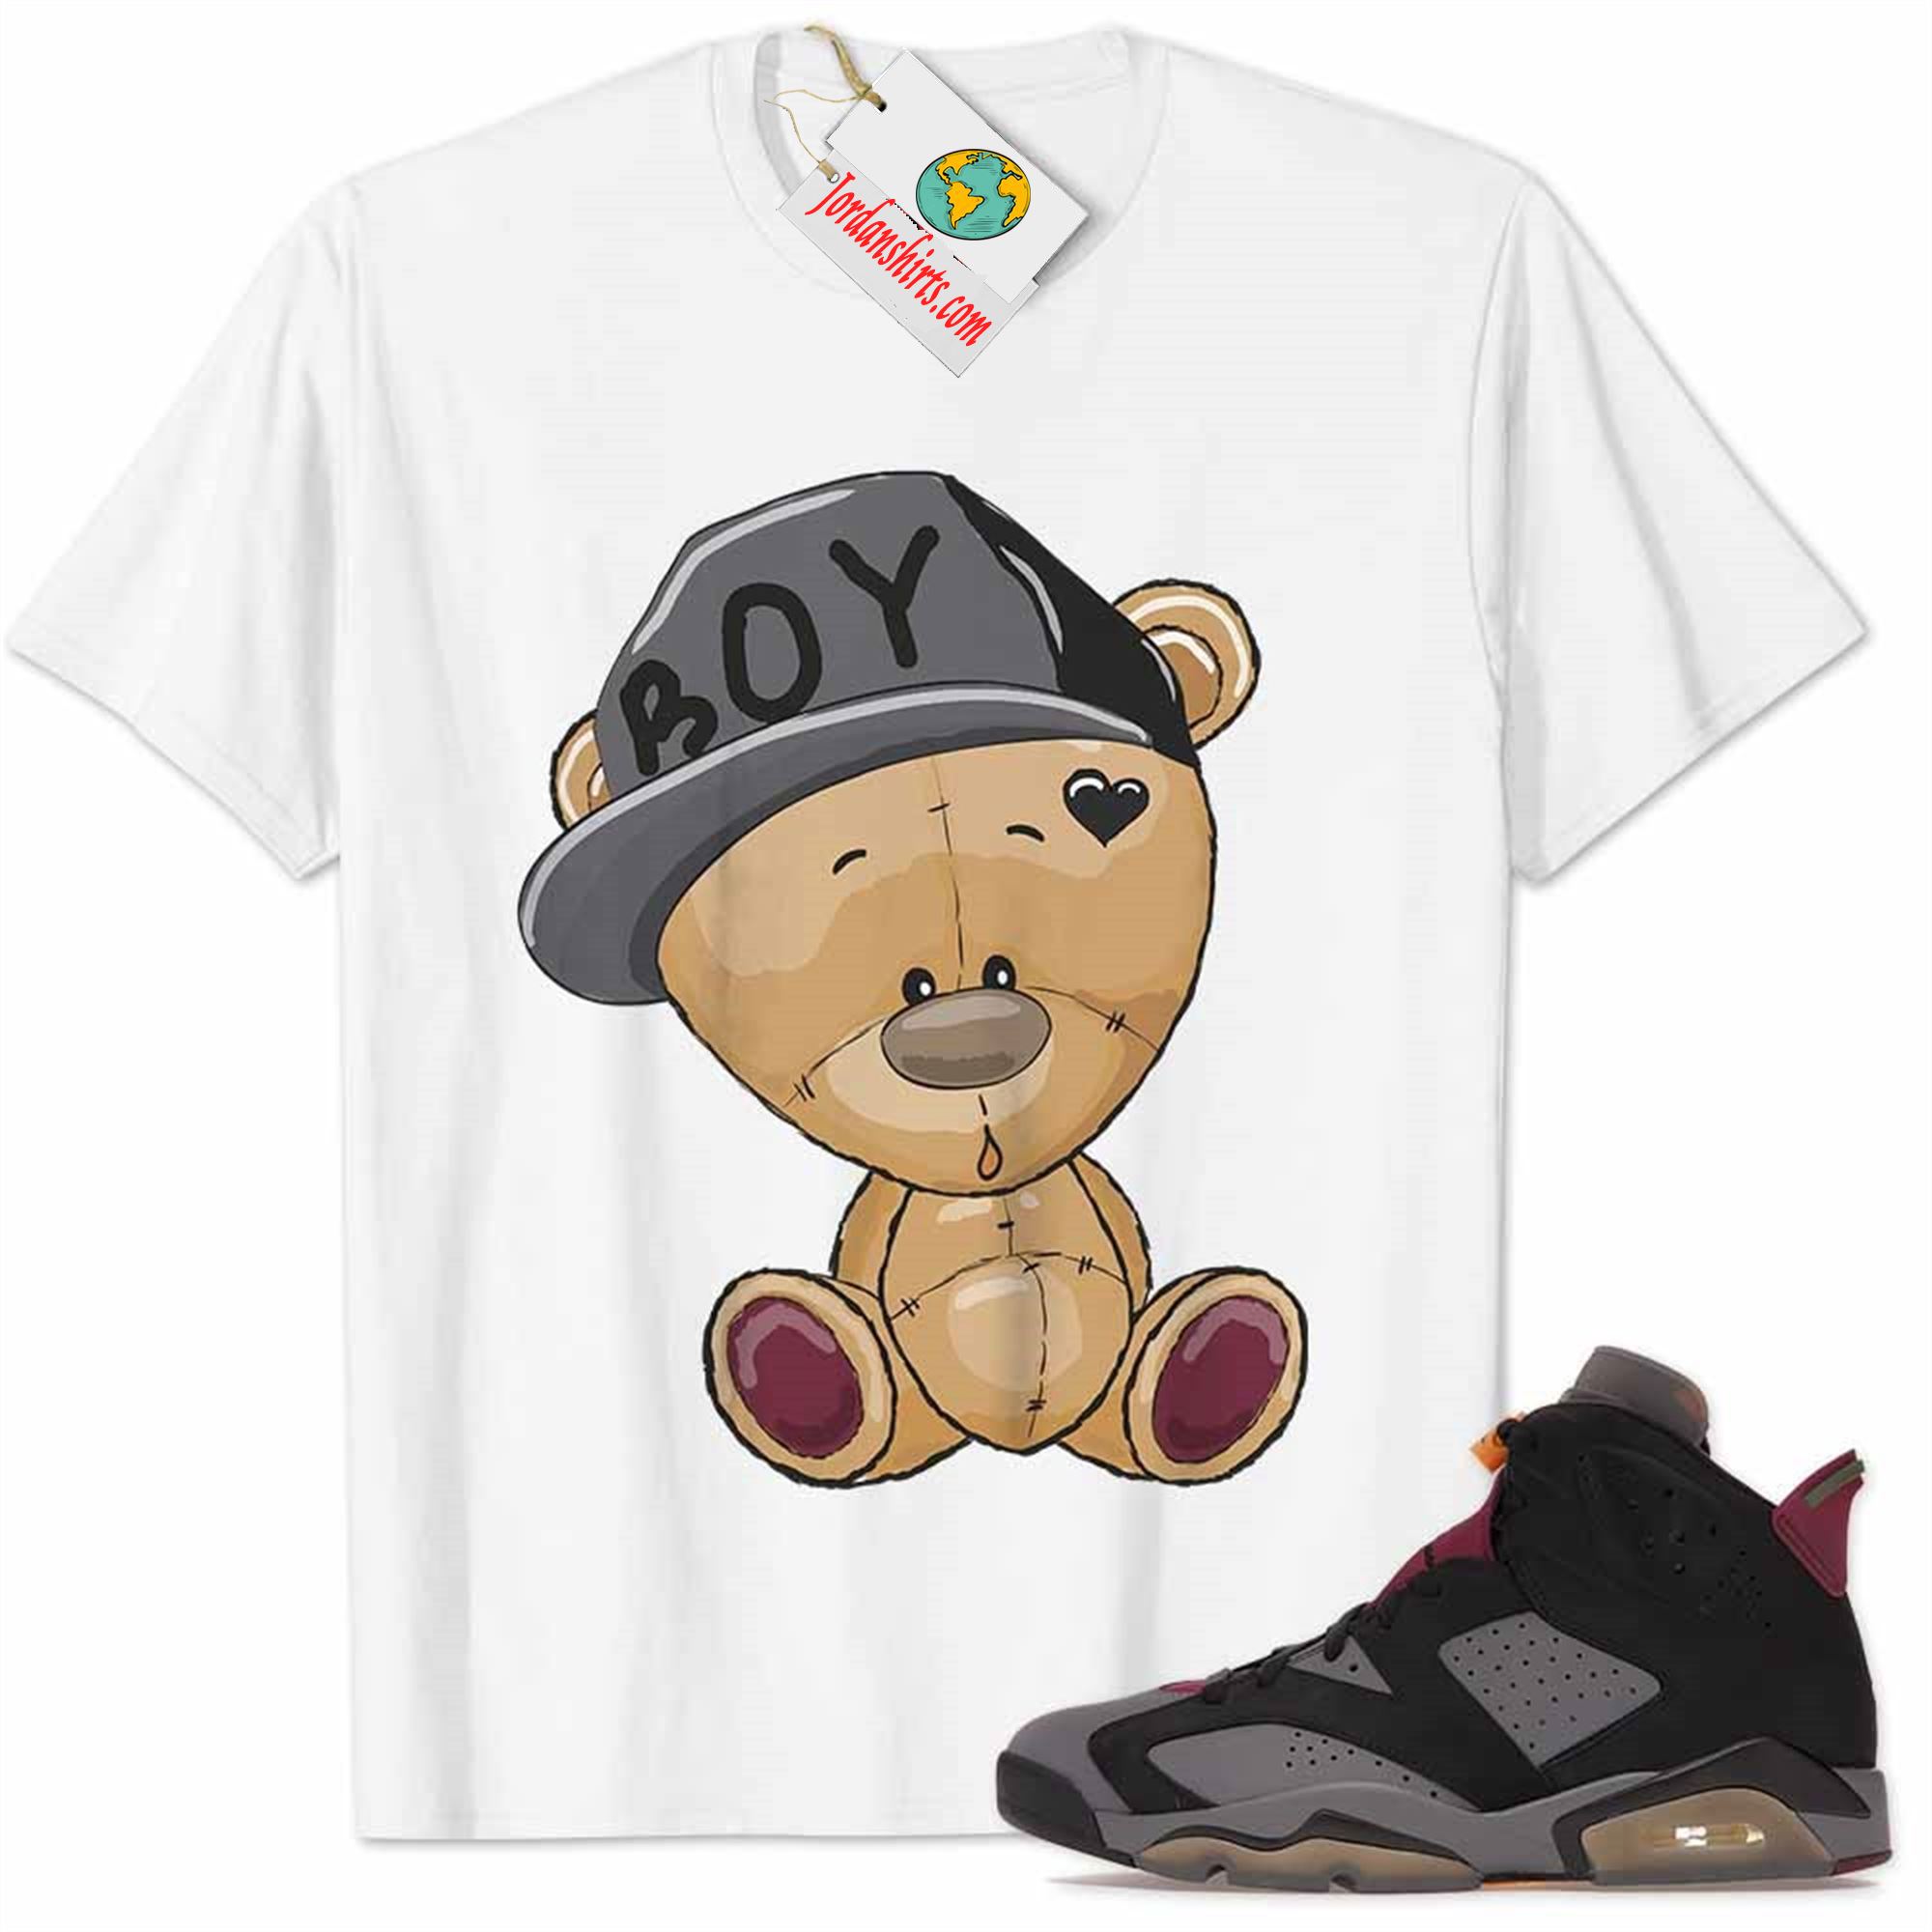 Jordan 6 Shirt, Jordan 6 Bordeaux Shirt Cute Baby Teddy Bear White Plus Size Up To 5xl